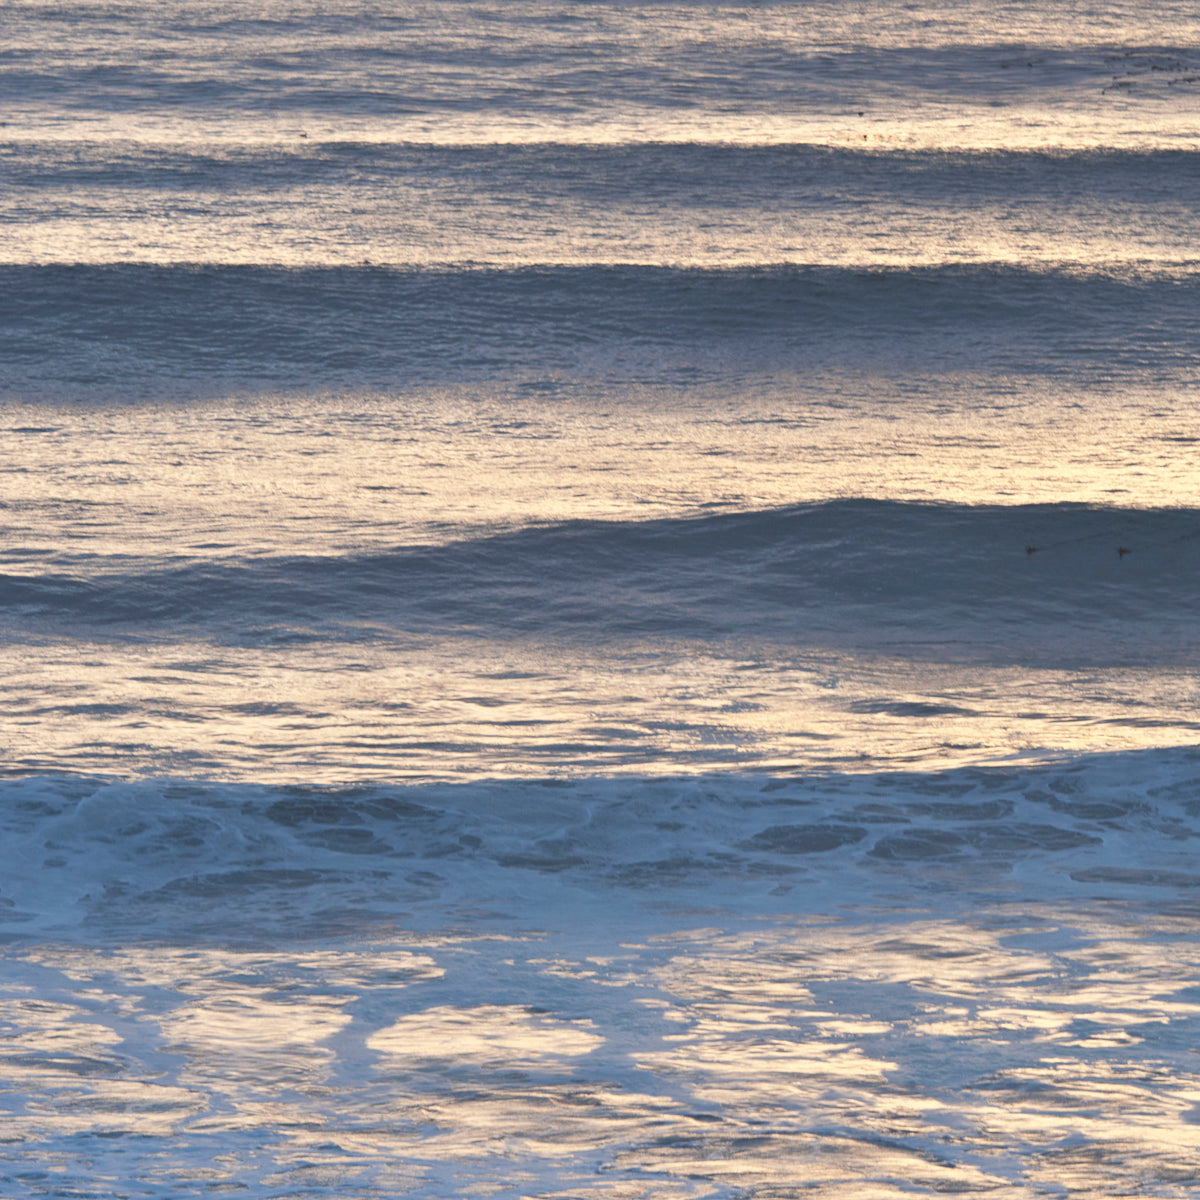 &lt;I&gt;Texture 8: Waves&lt;/I&gt;&lt;br&gt;Mendocino Coast, California, 2015&lt;br&gt;&lt;br&gt;GC0402